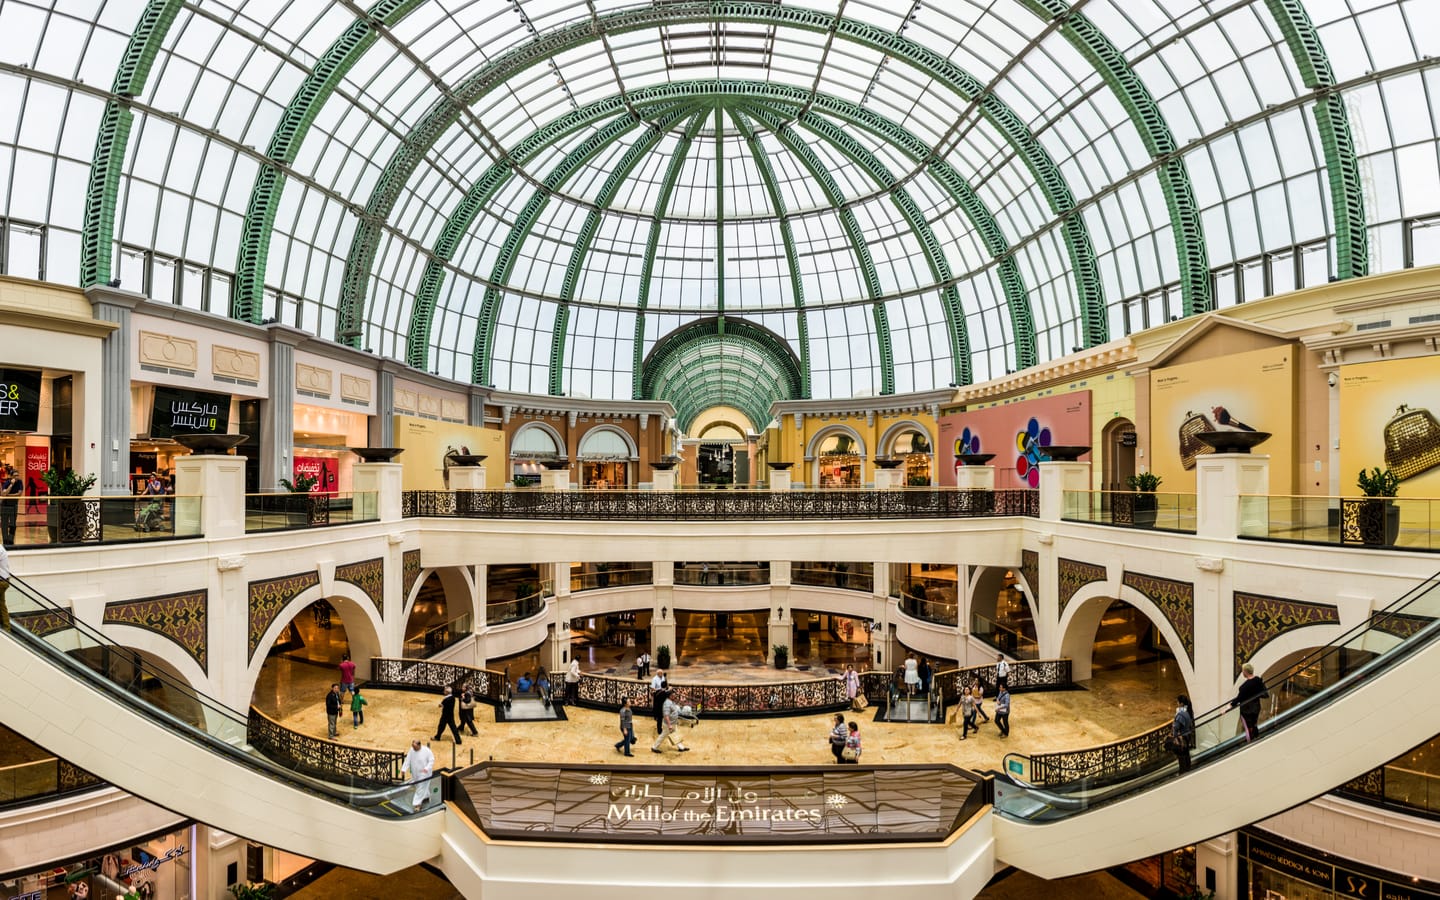 Top 10 Shopping Malls In Dubai: Dubai Mall, Mall of the Emirates & More! - MyBayut